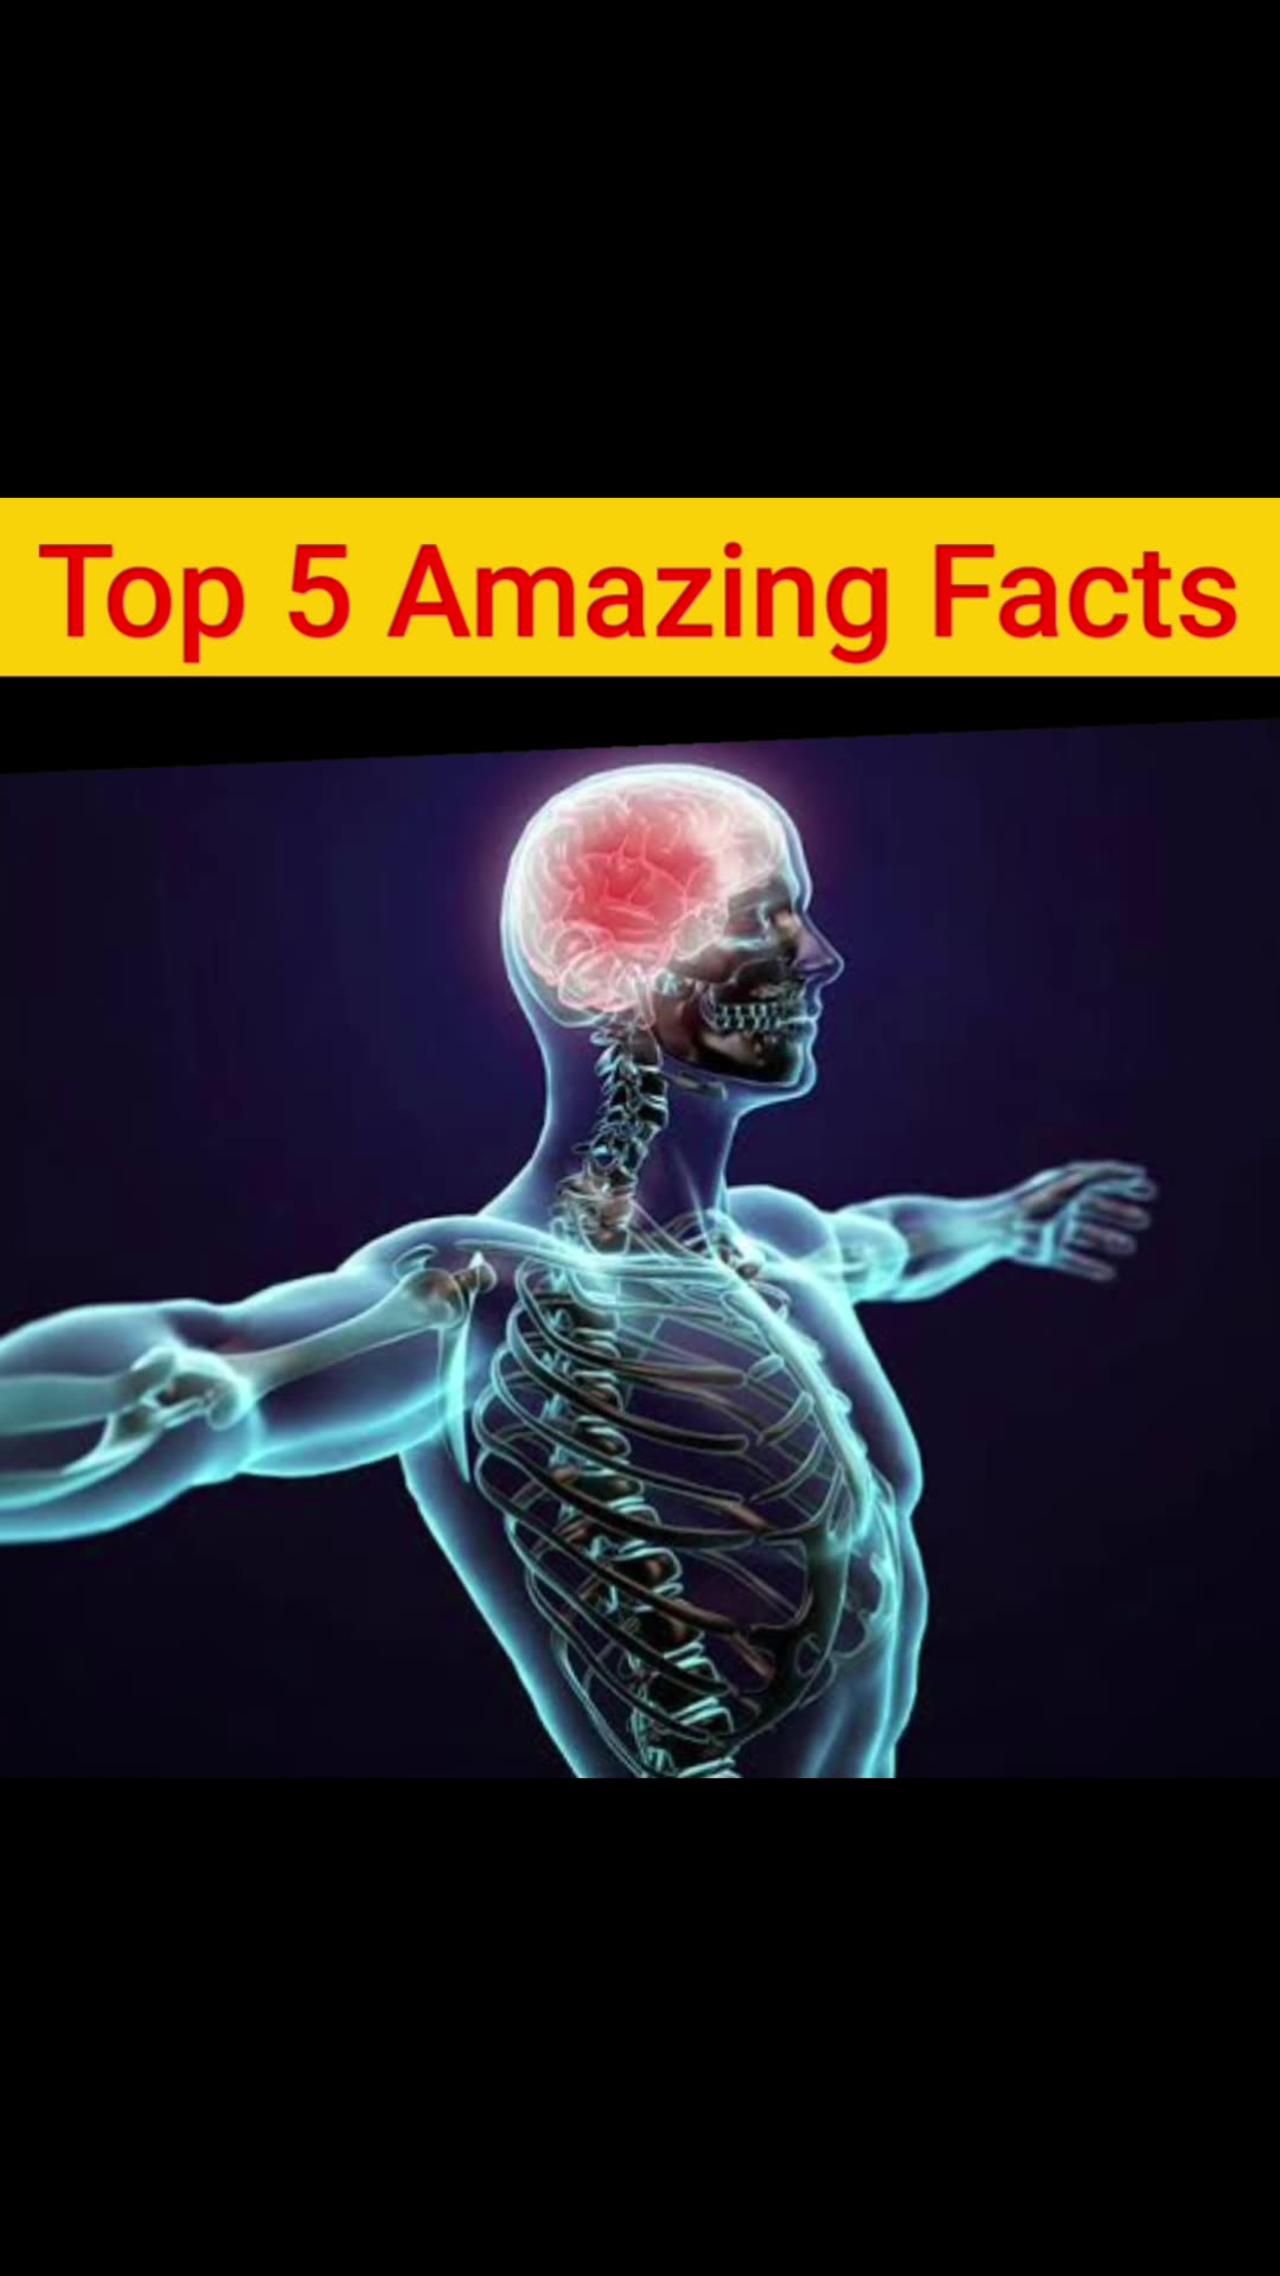 हैरान कर देने वाले रोचक तथ्य #amazingfactsinhindi amazingfacts #unknownfacts #fact